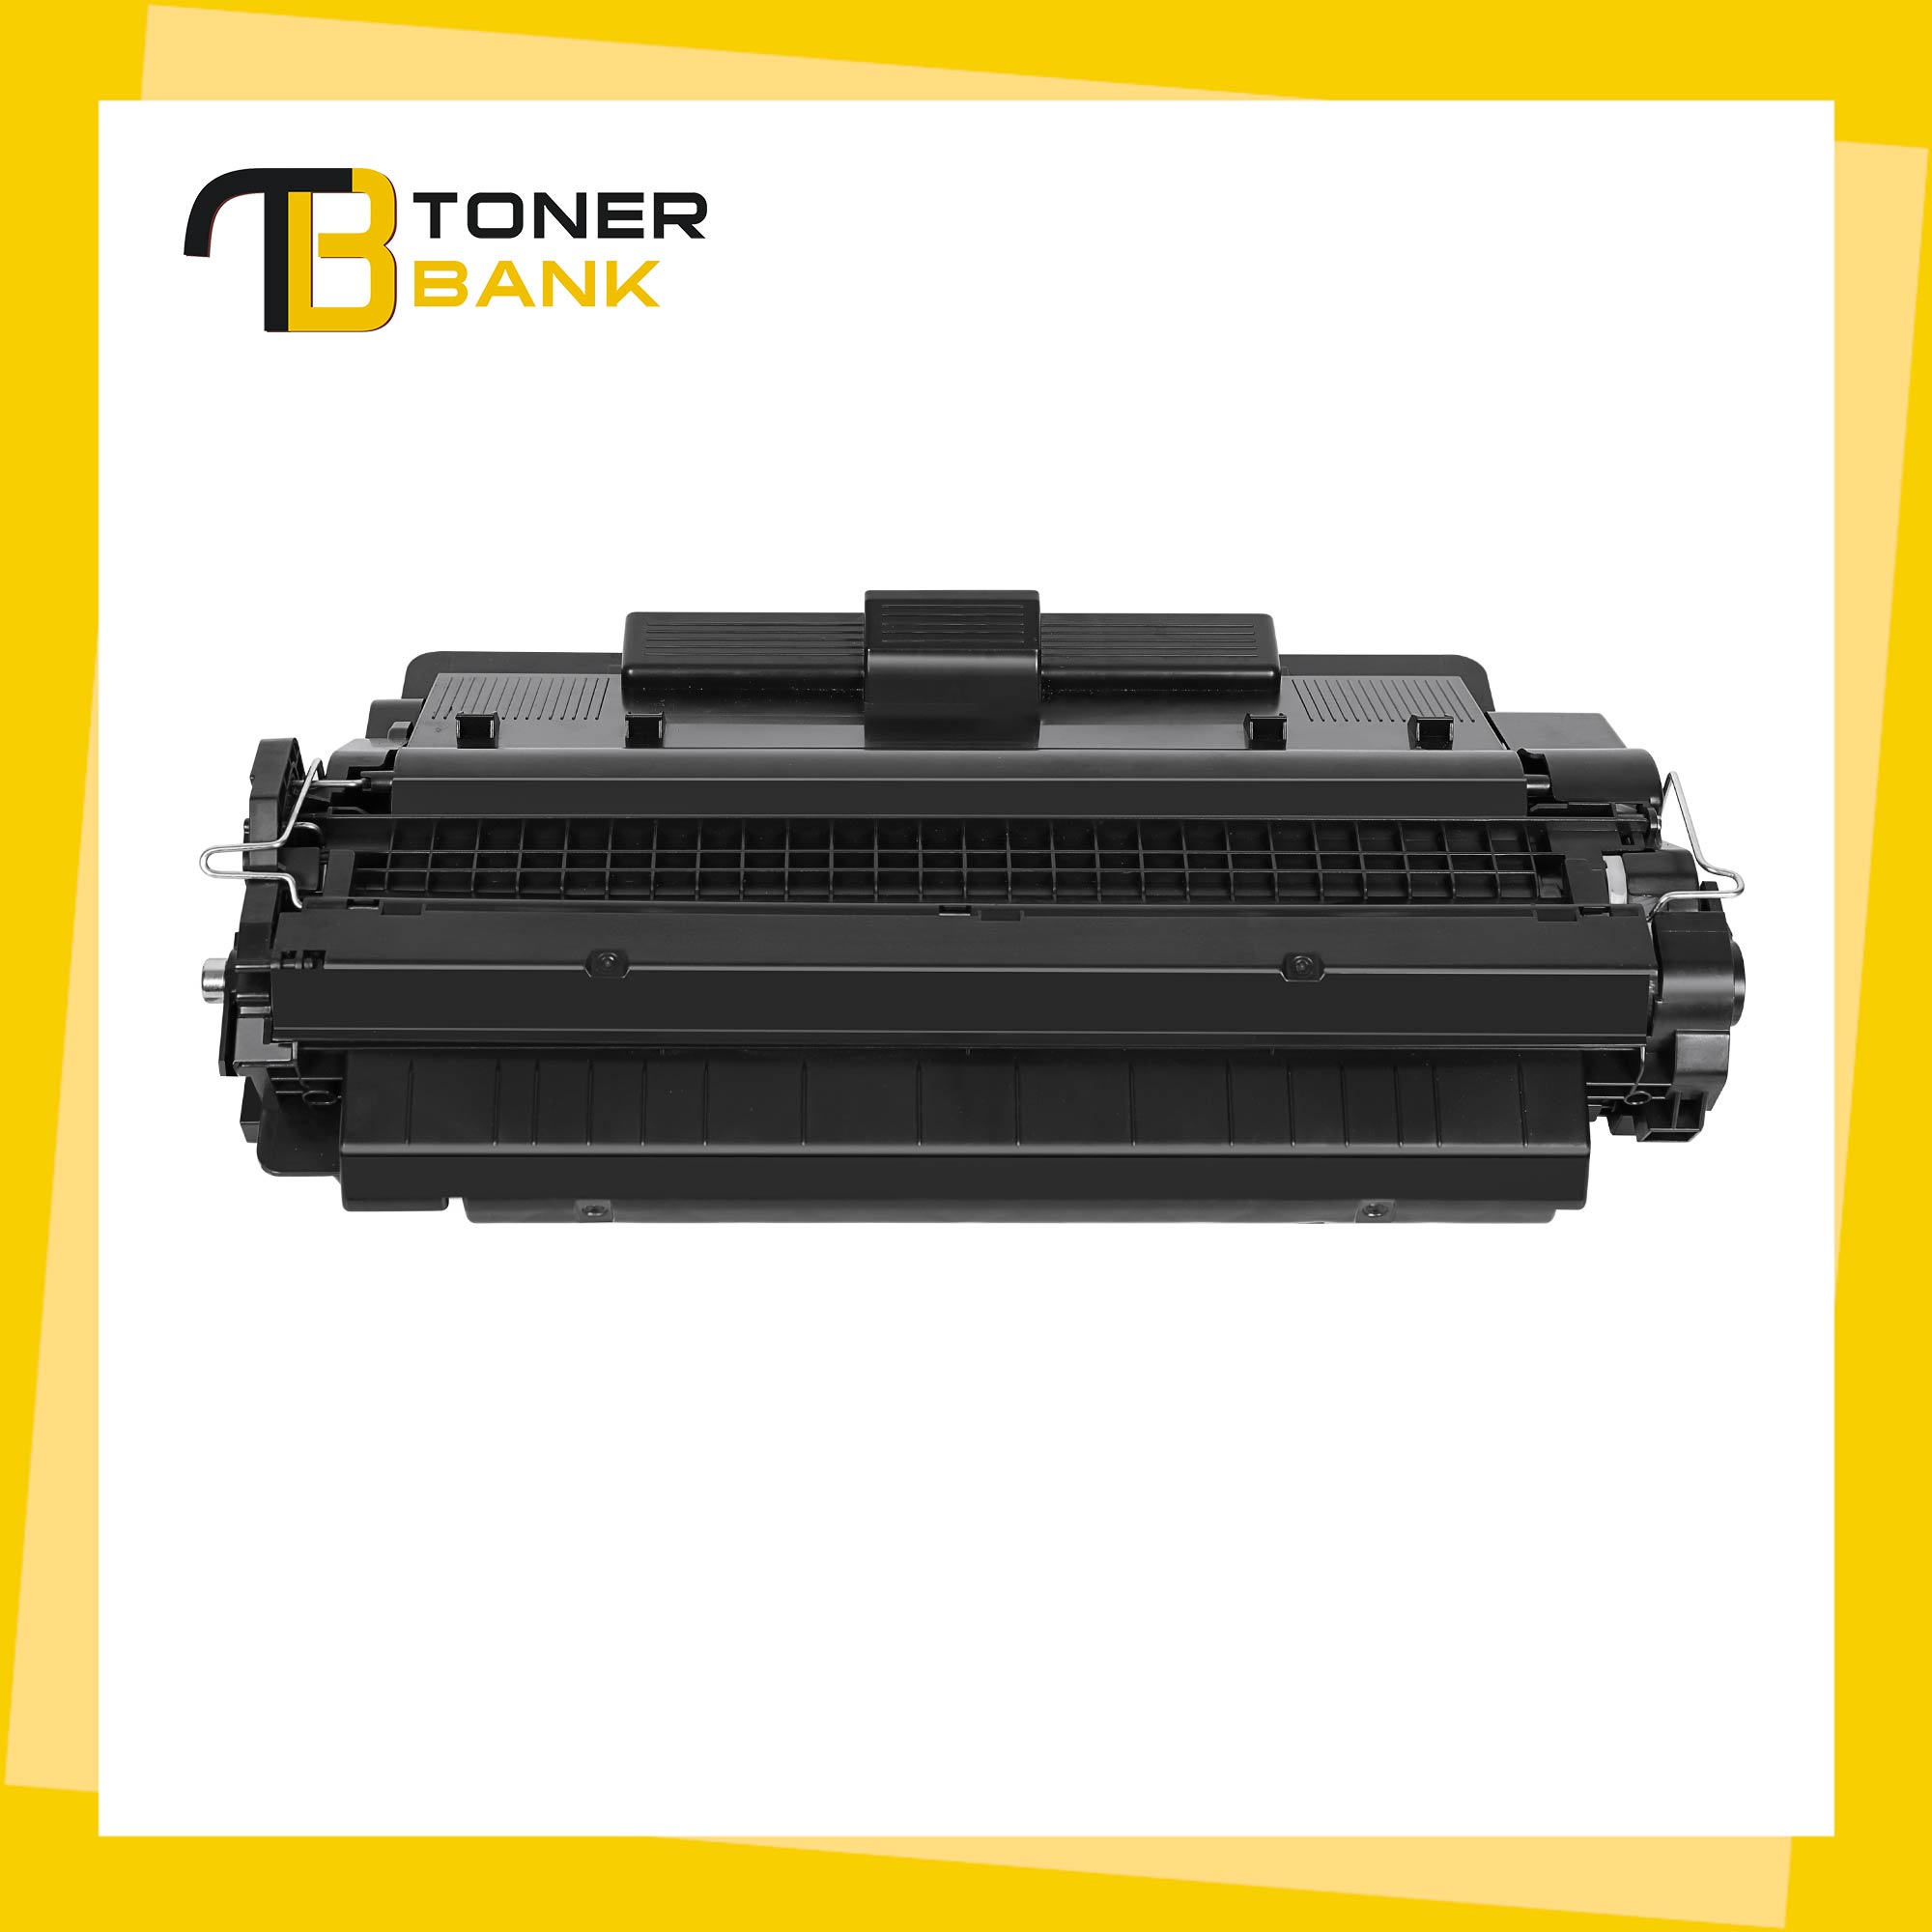 Toner Bank Compatible Toner for HP CF214X 14X HP LaserJet Enterprise MFP M725dn M725f M725z M725z M712n M712dn M712xh Printer Ink Black, 5-Pack - image 2 of 9